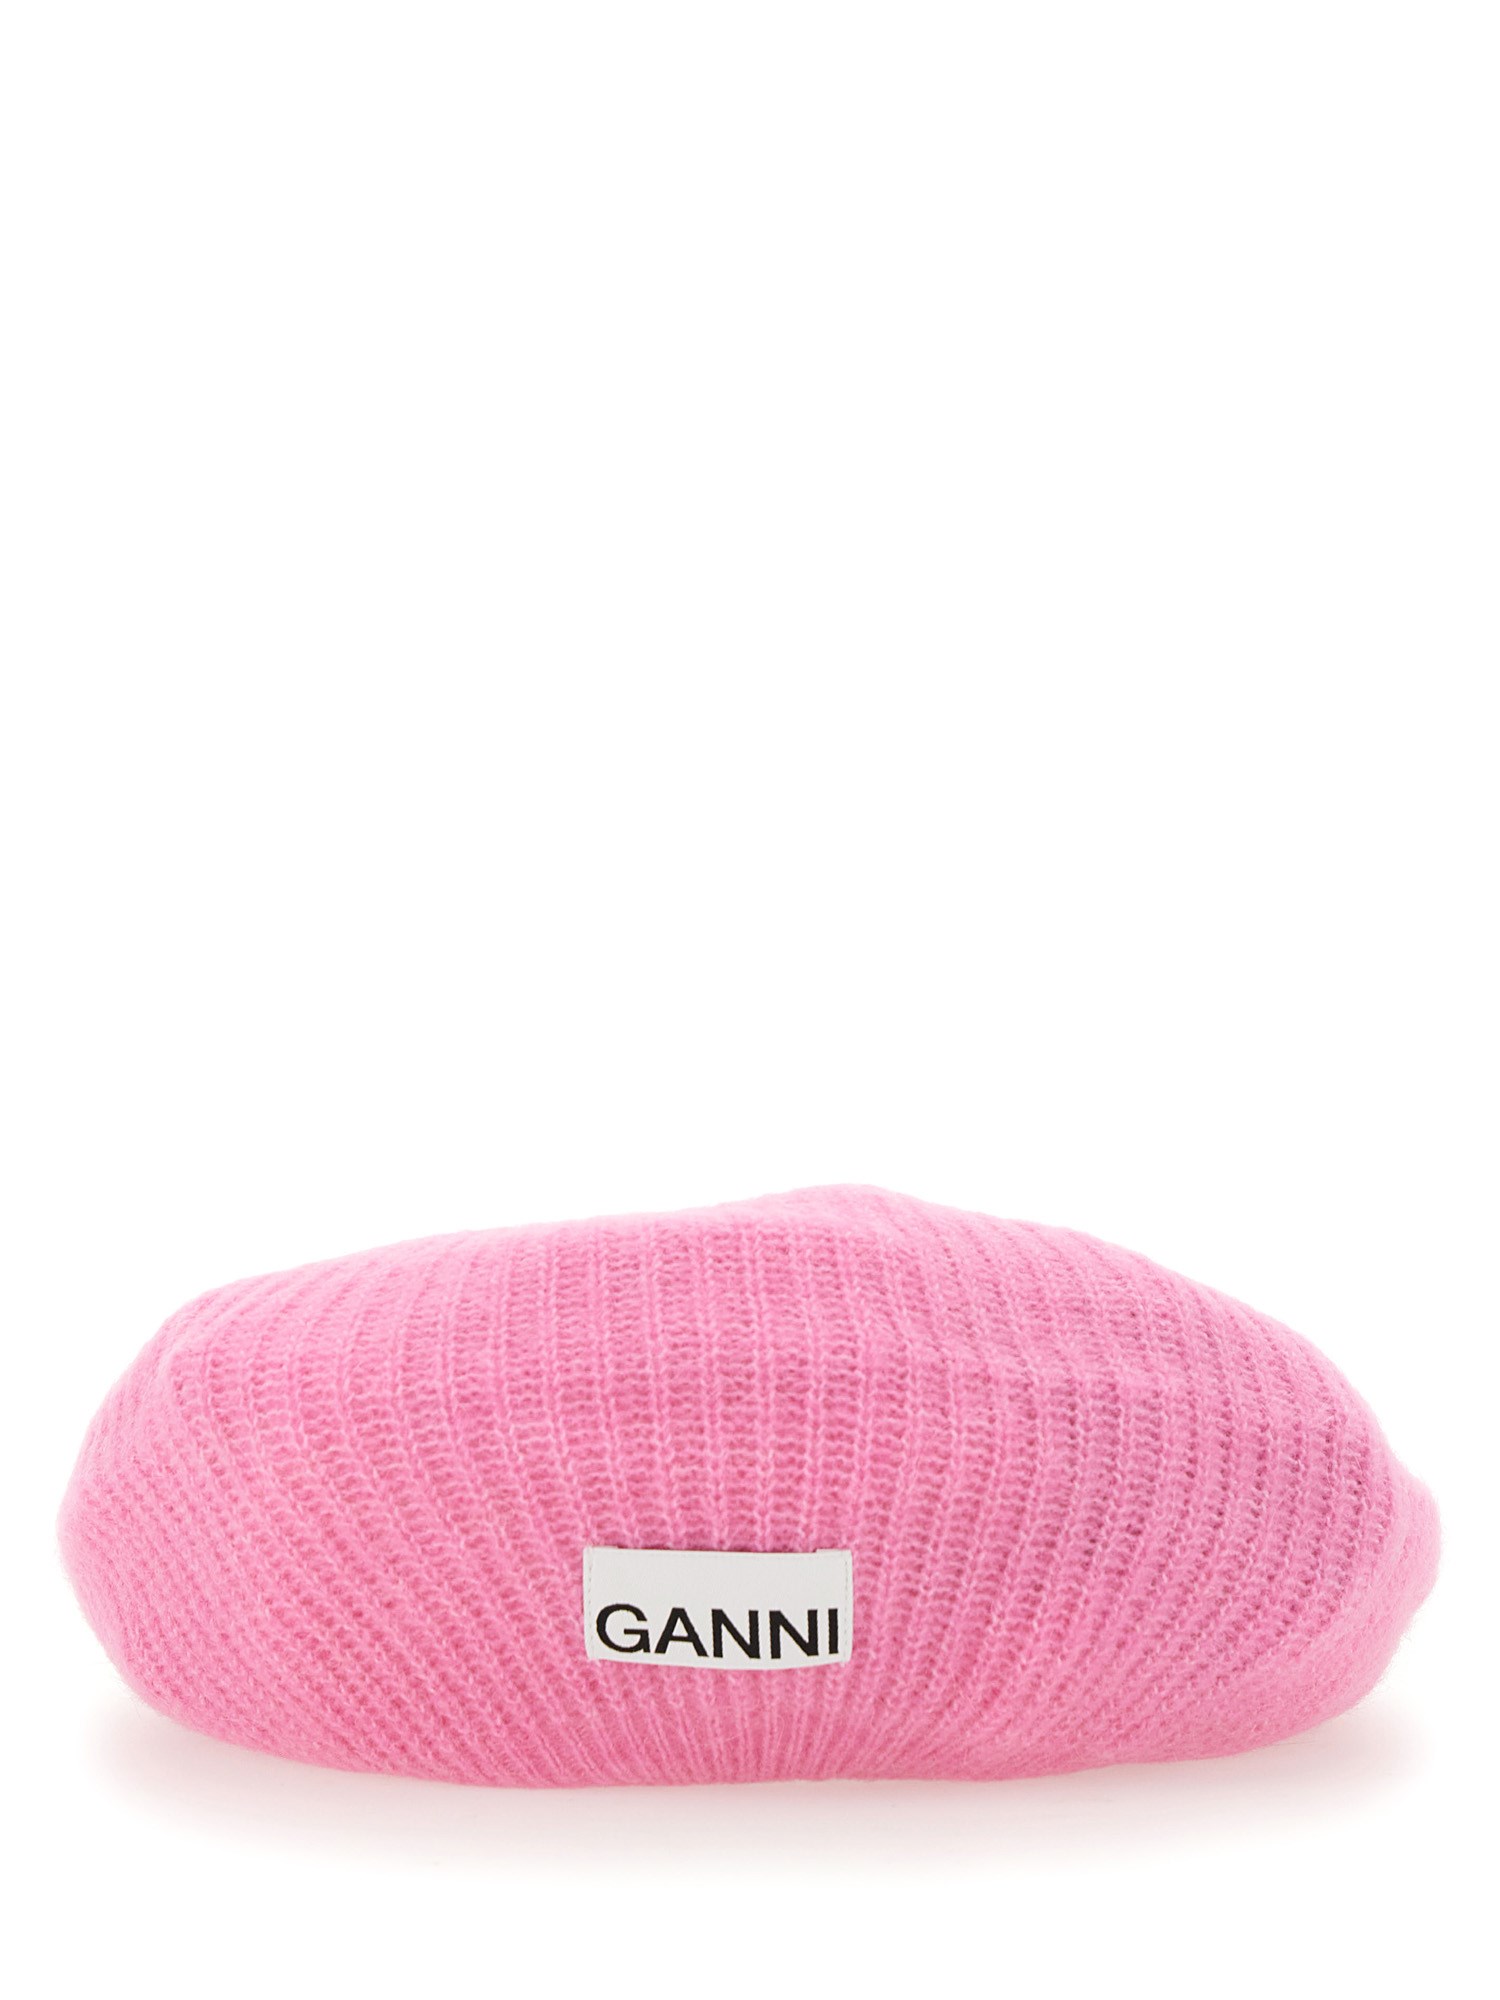 ganni cap with logo